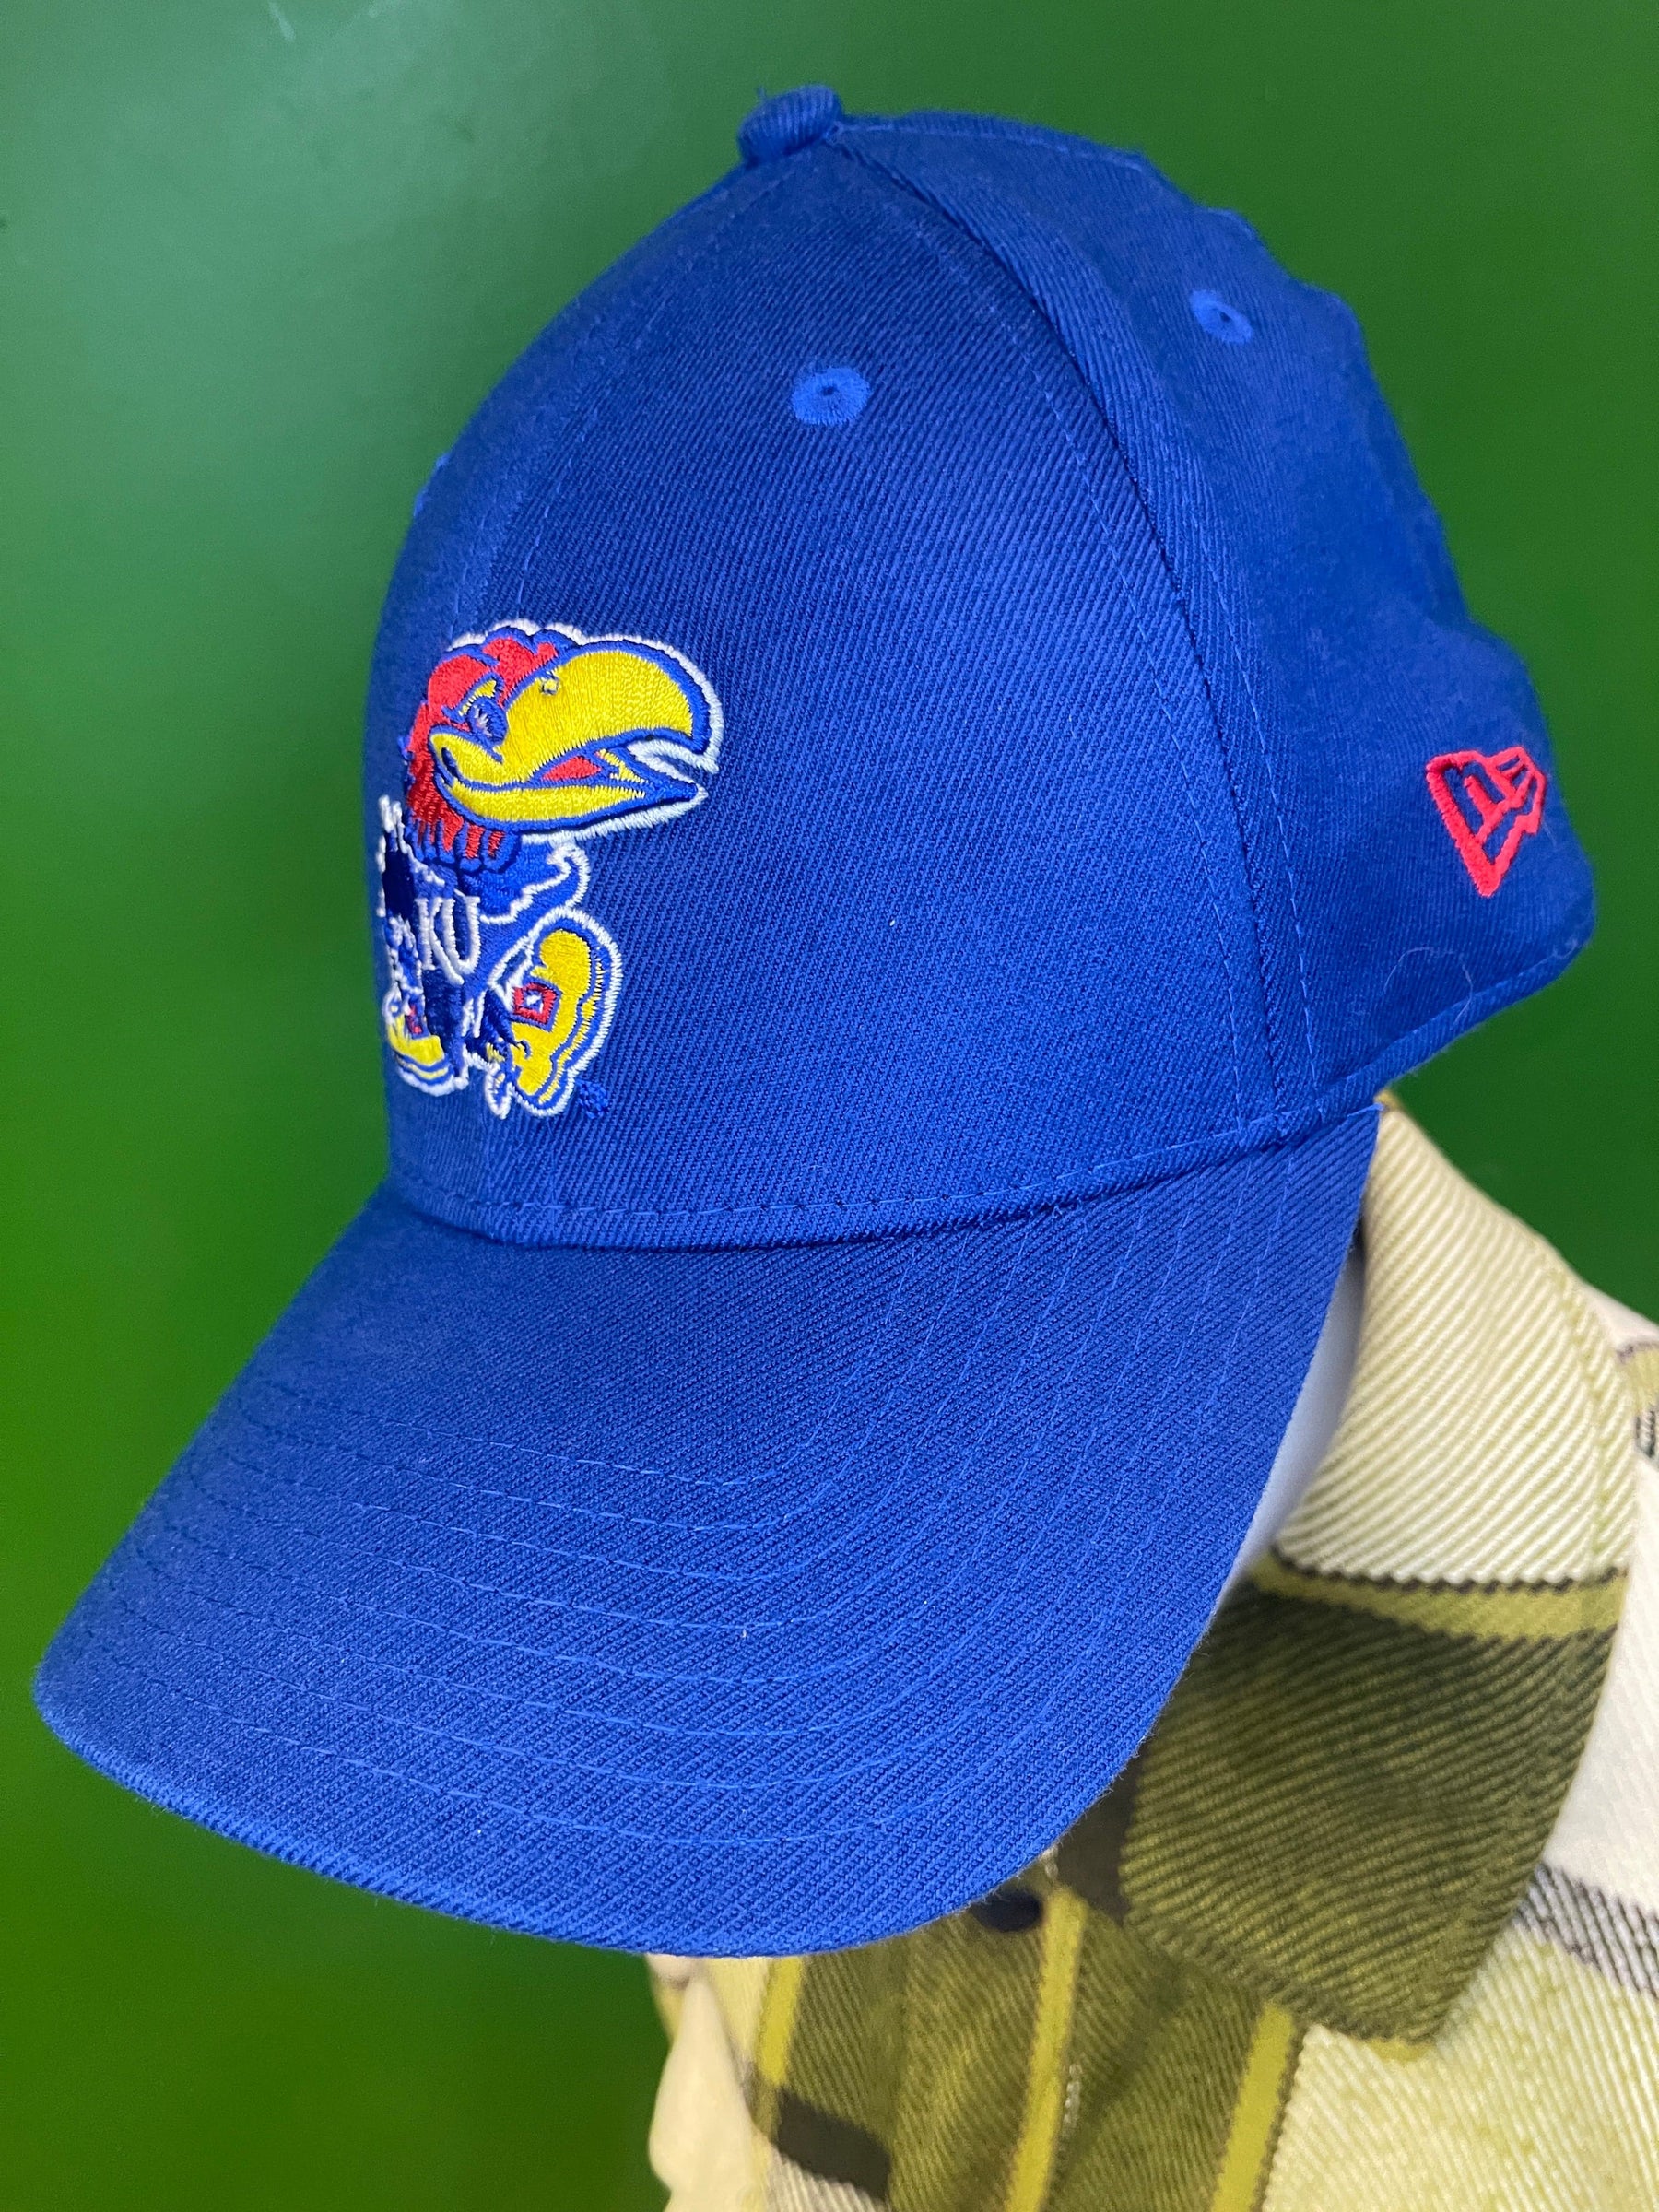 NCAA Kansas Jayhawks New Era 39THIRTY Hat/Cap Small/Medium